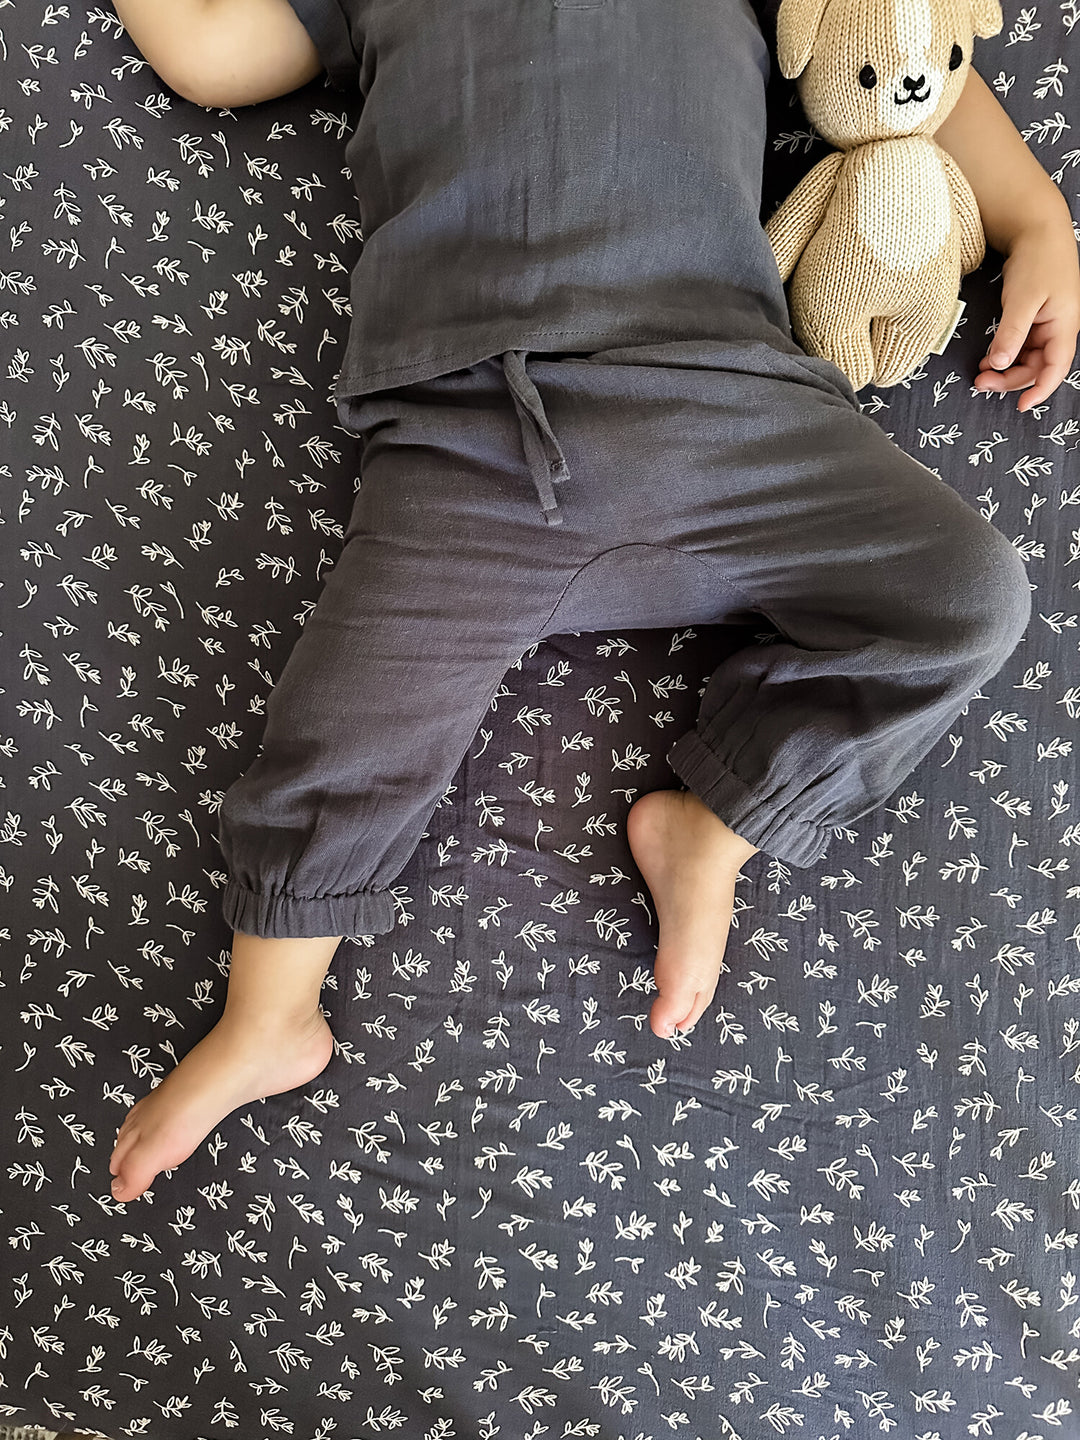 Child wearing Organic Muslin Tee & Harem Pant Set in Dusk.